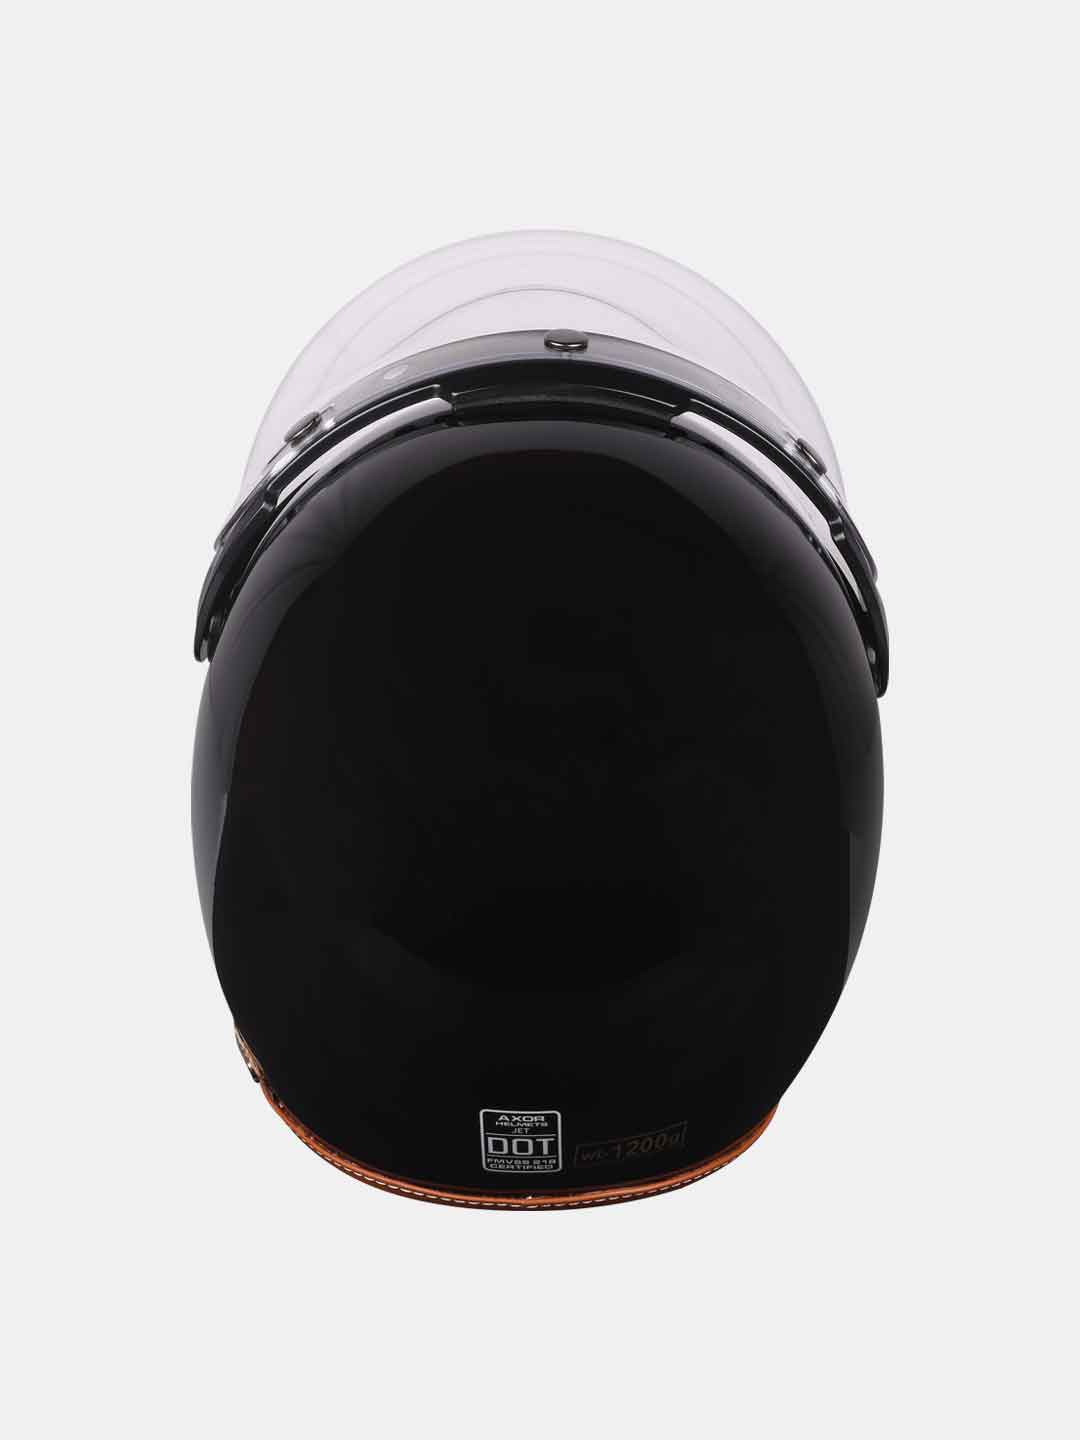 Axor Retro Jet Leather Black Helmet